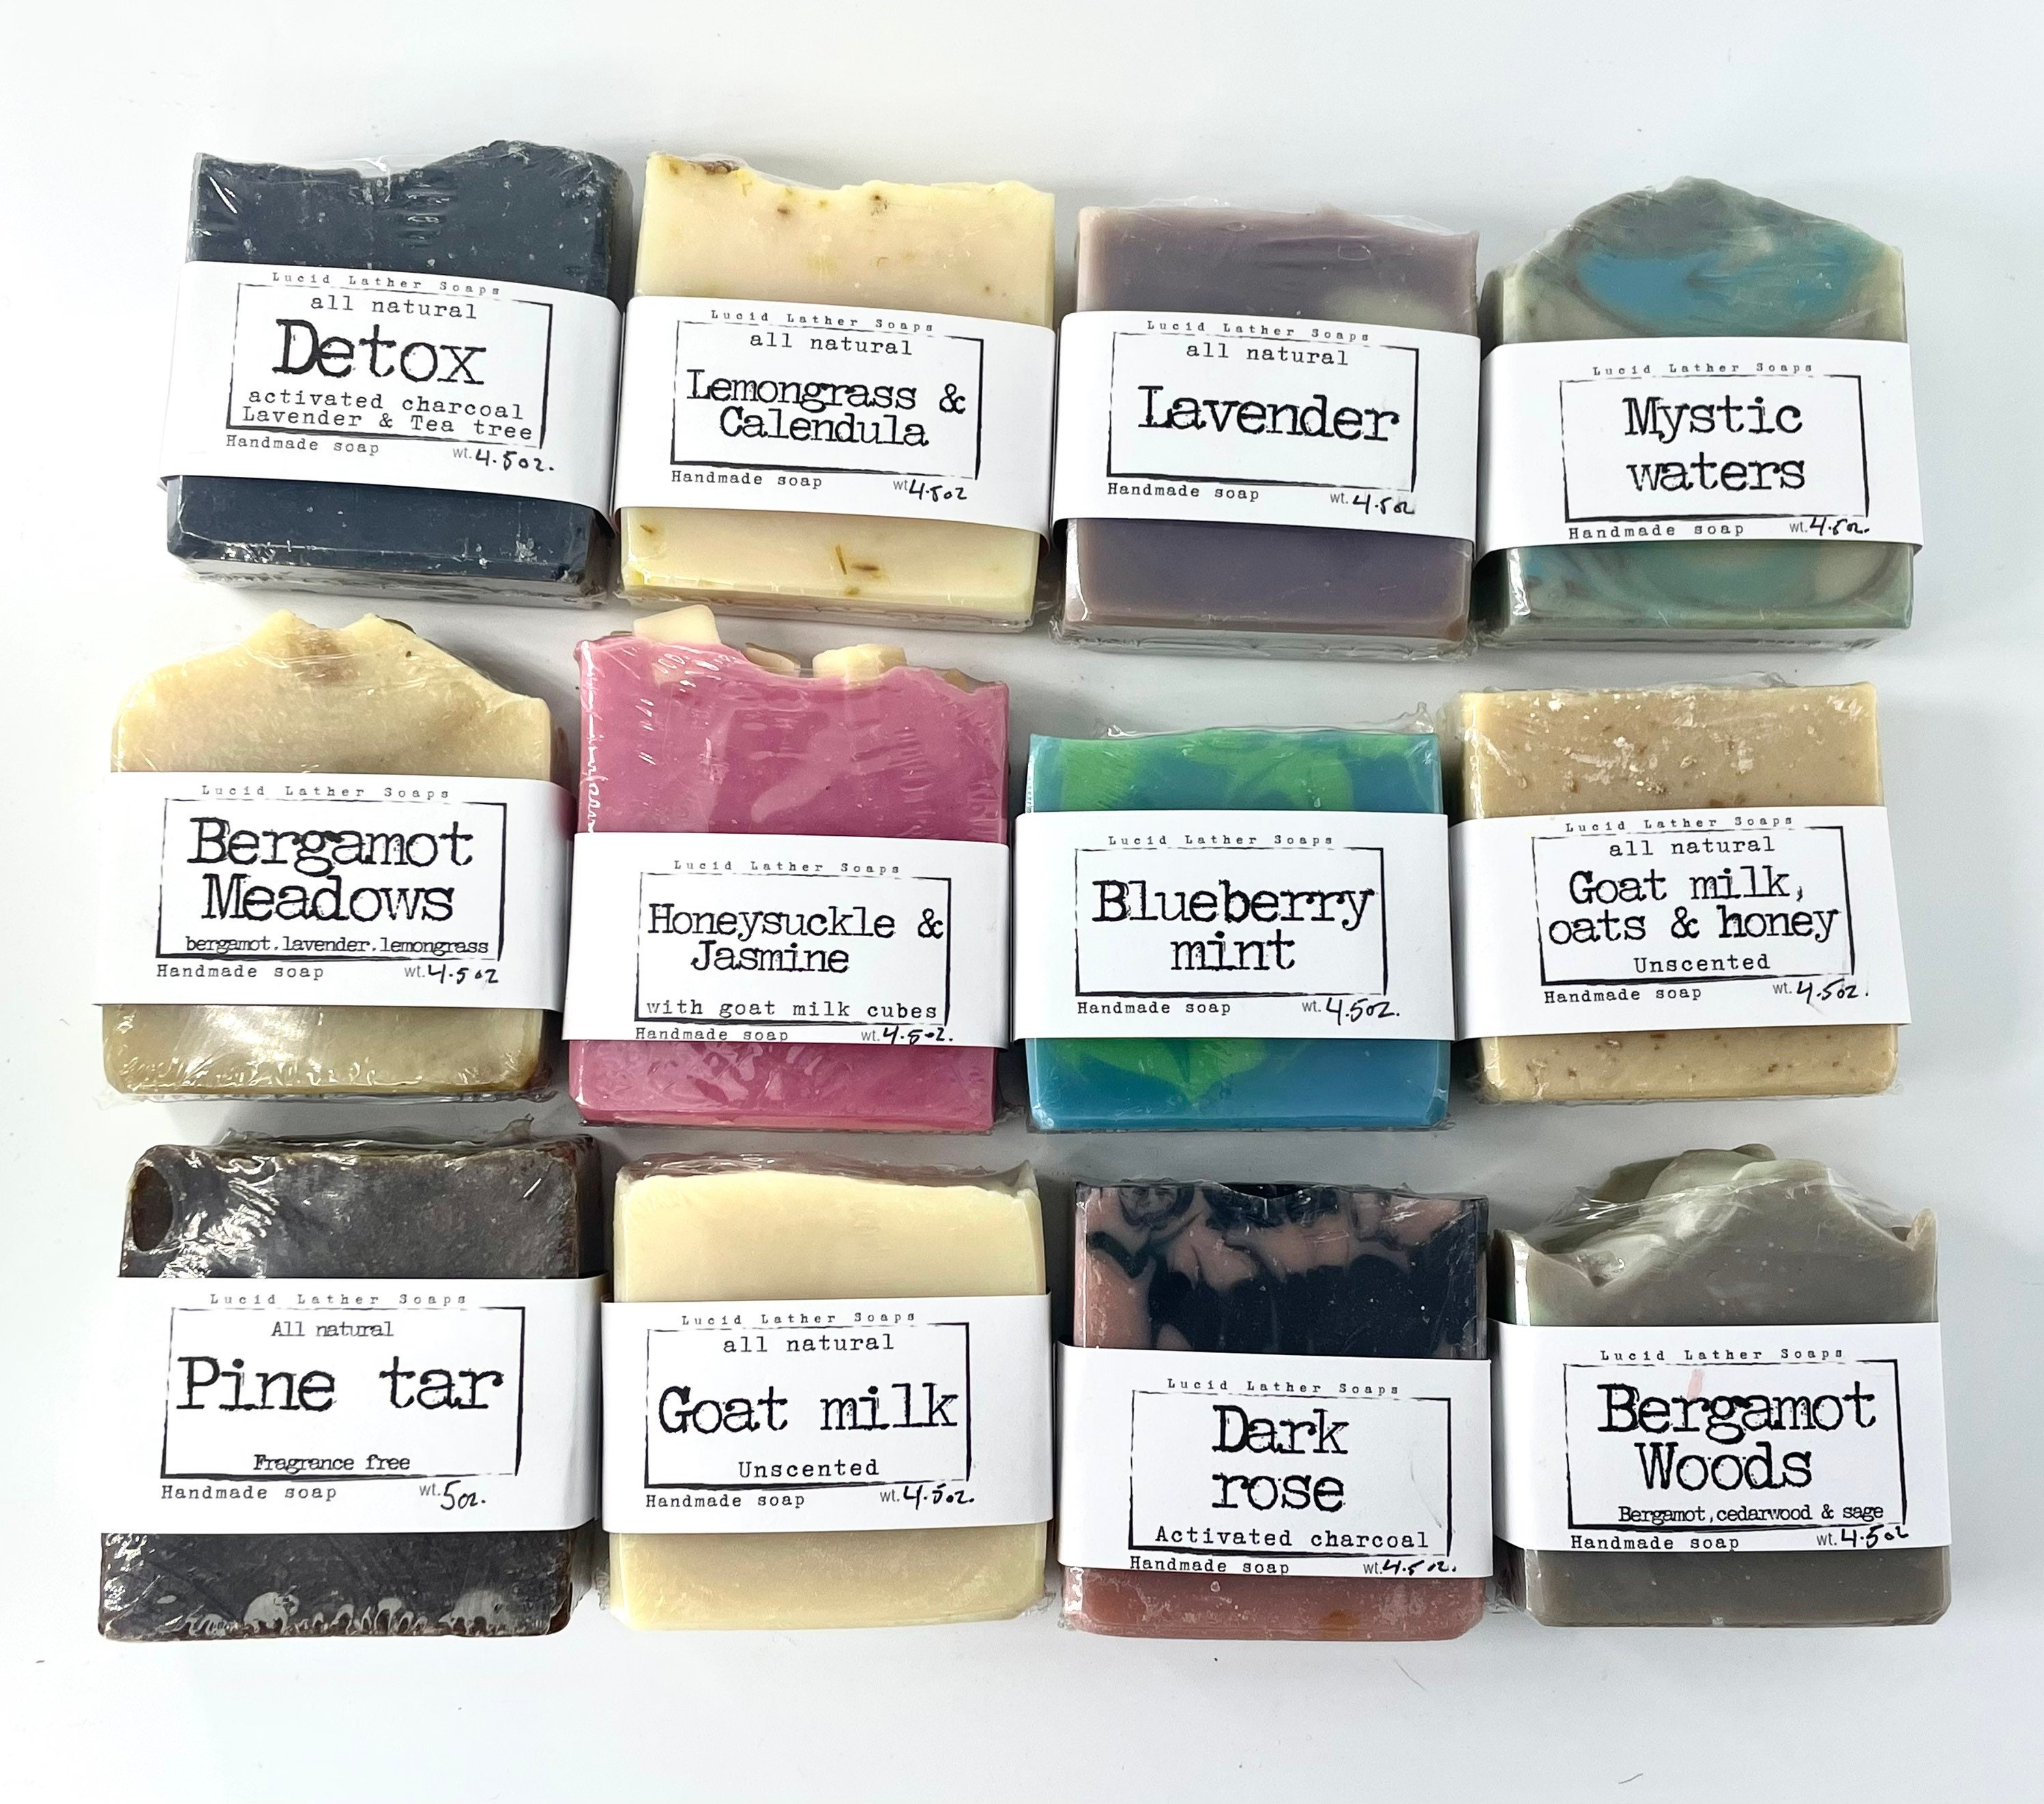 Dude Soap Sampler Handmade All Natural Cold Process Soap – Mally